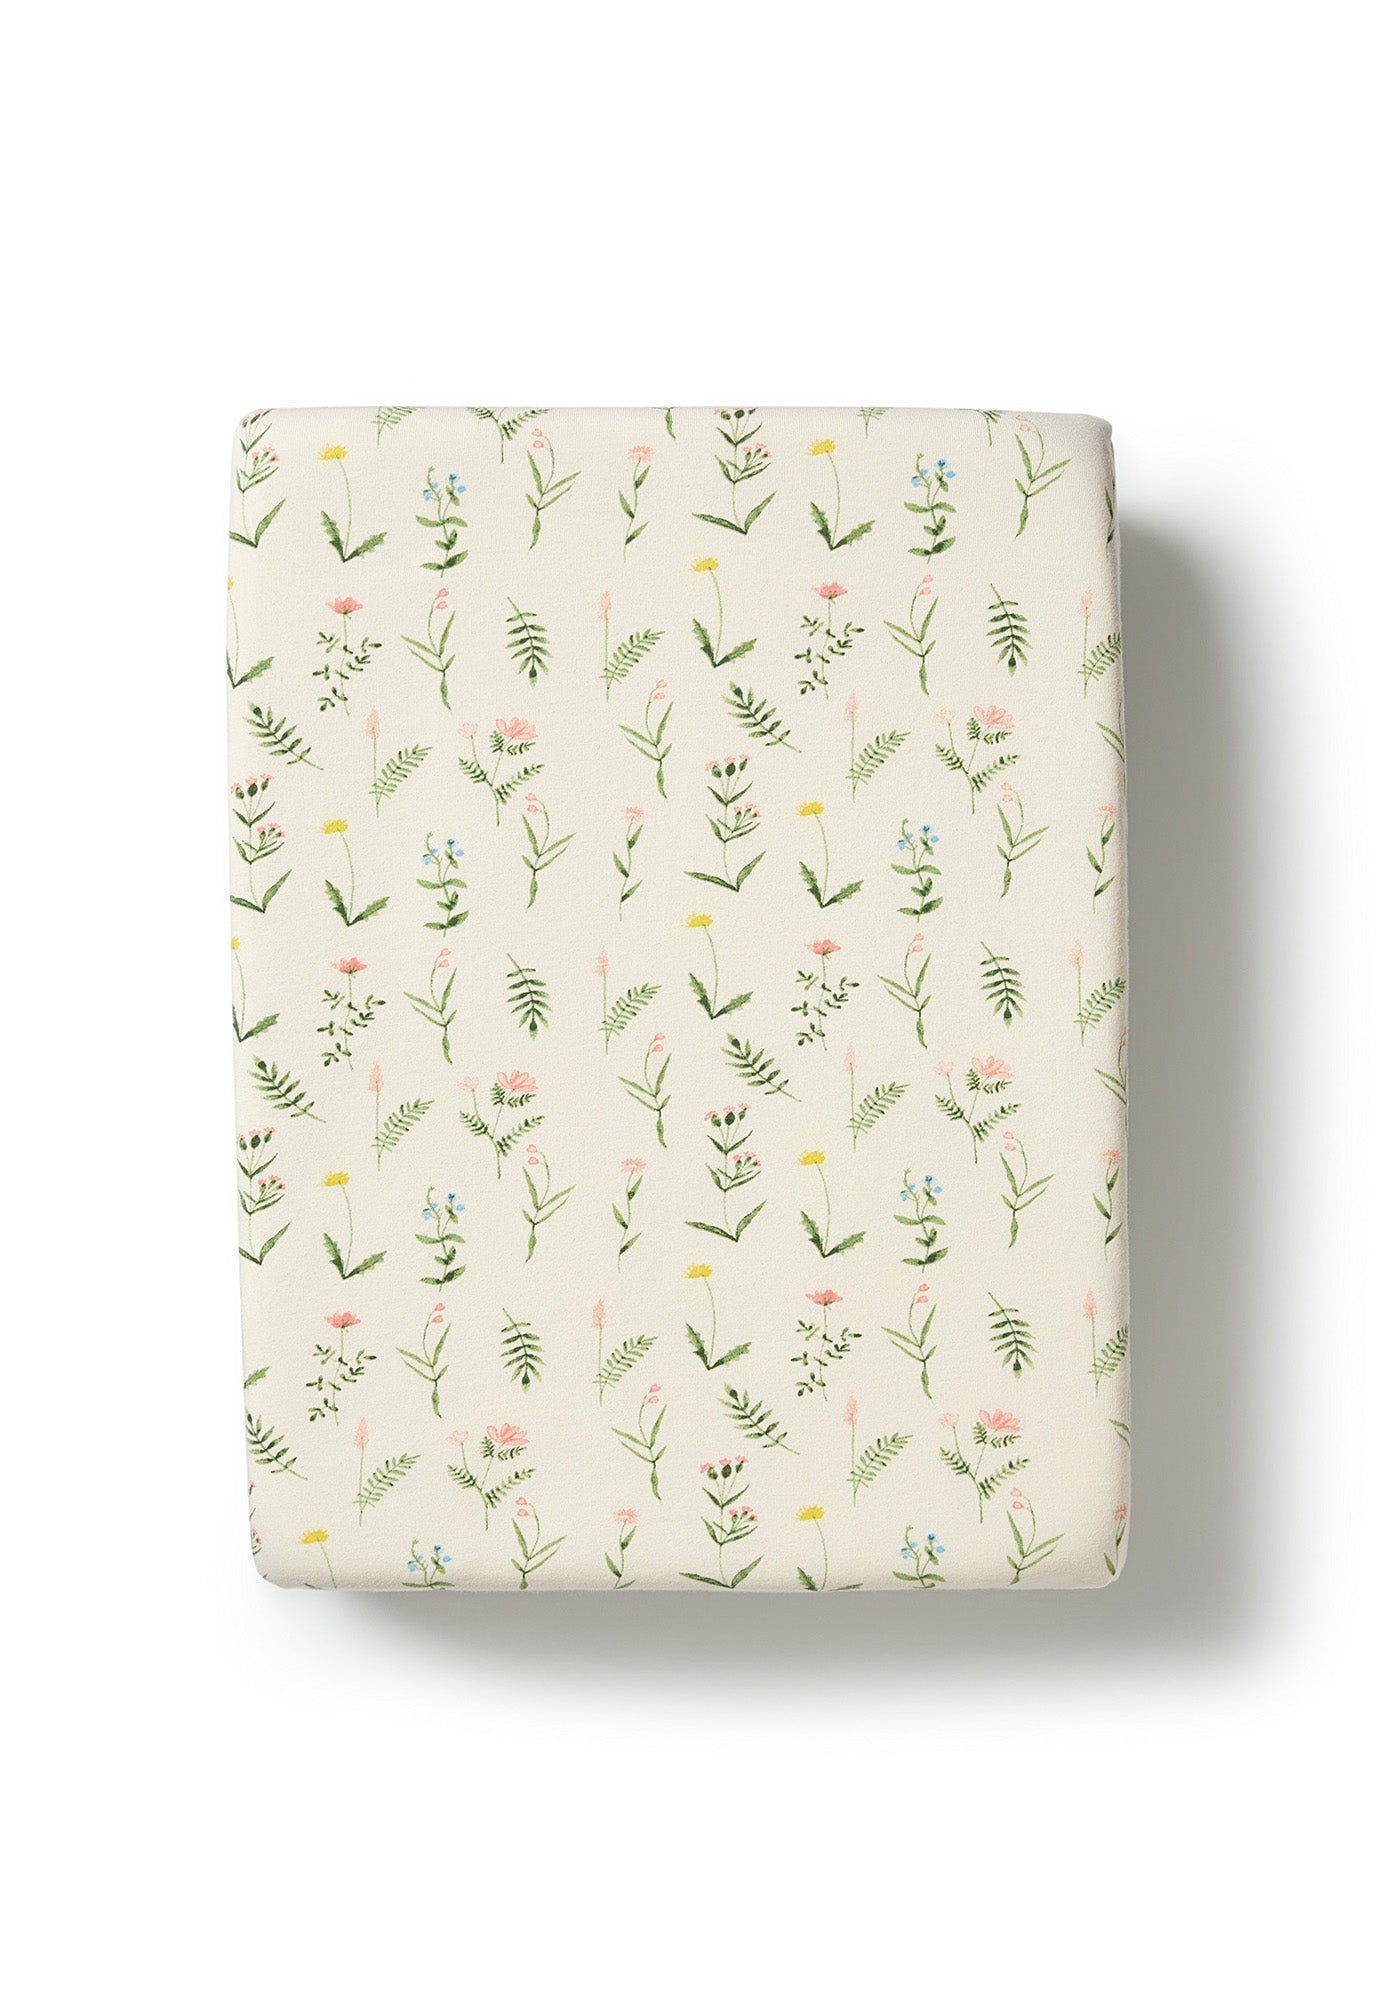 wilson & frenchy - bassinet sheet - wild flower